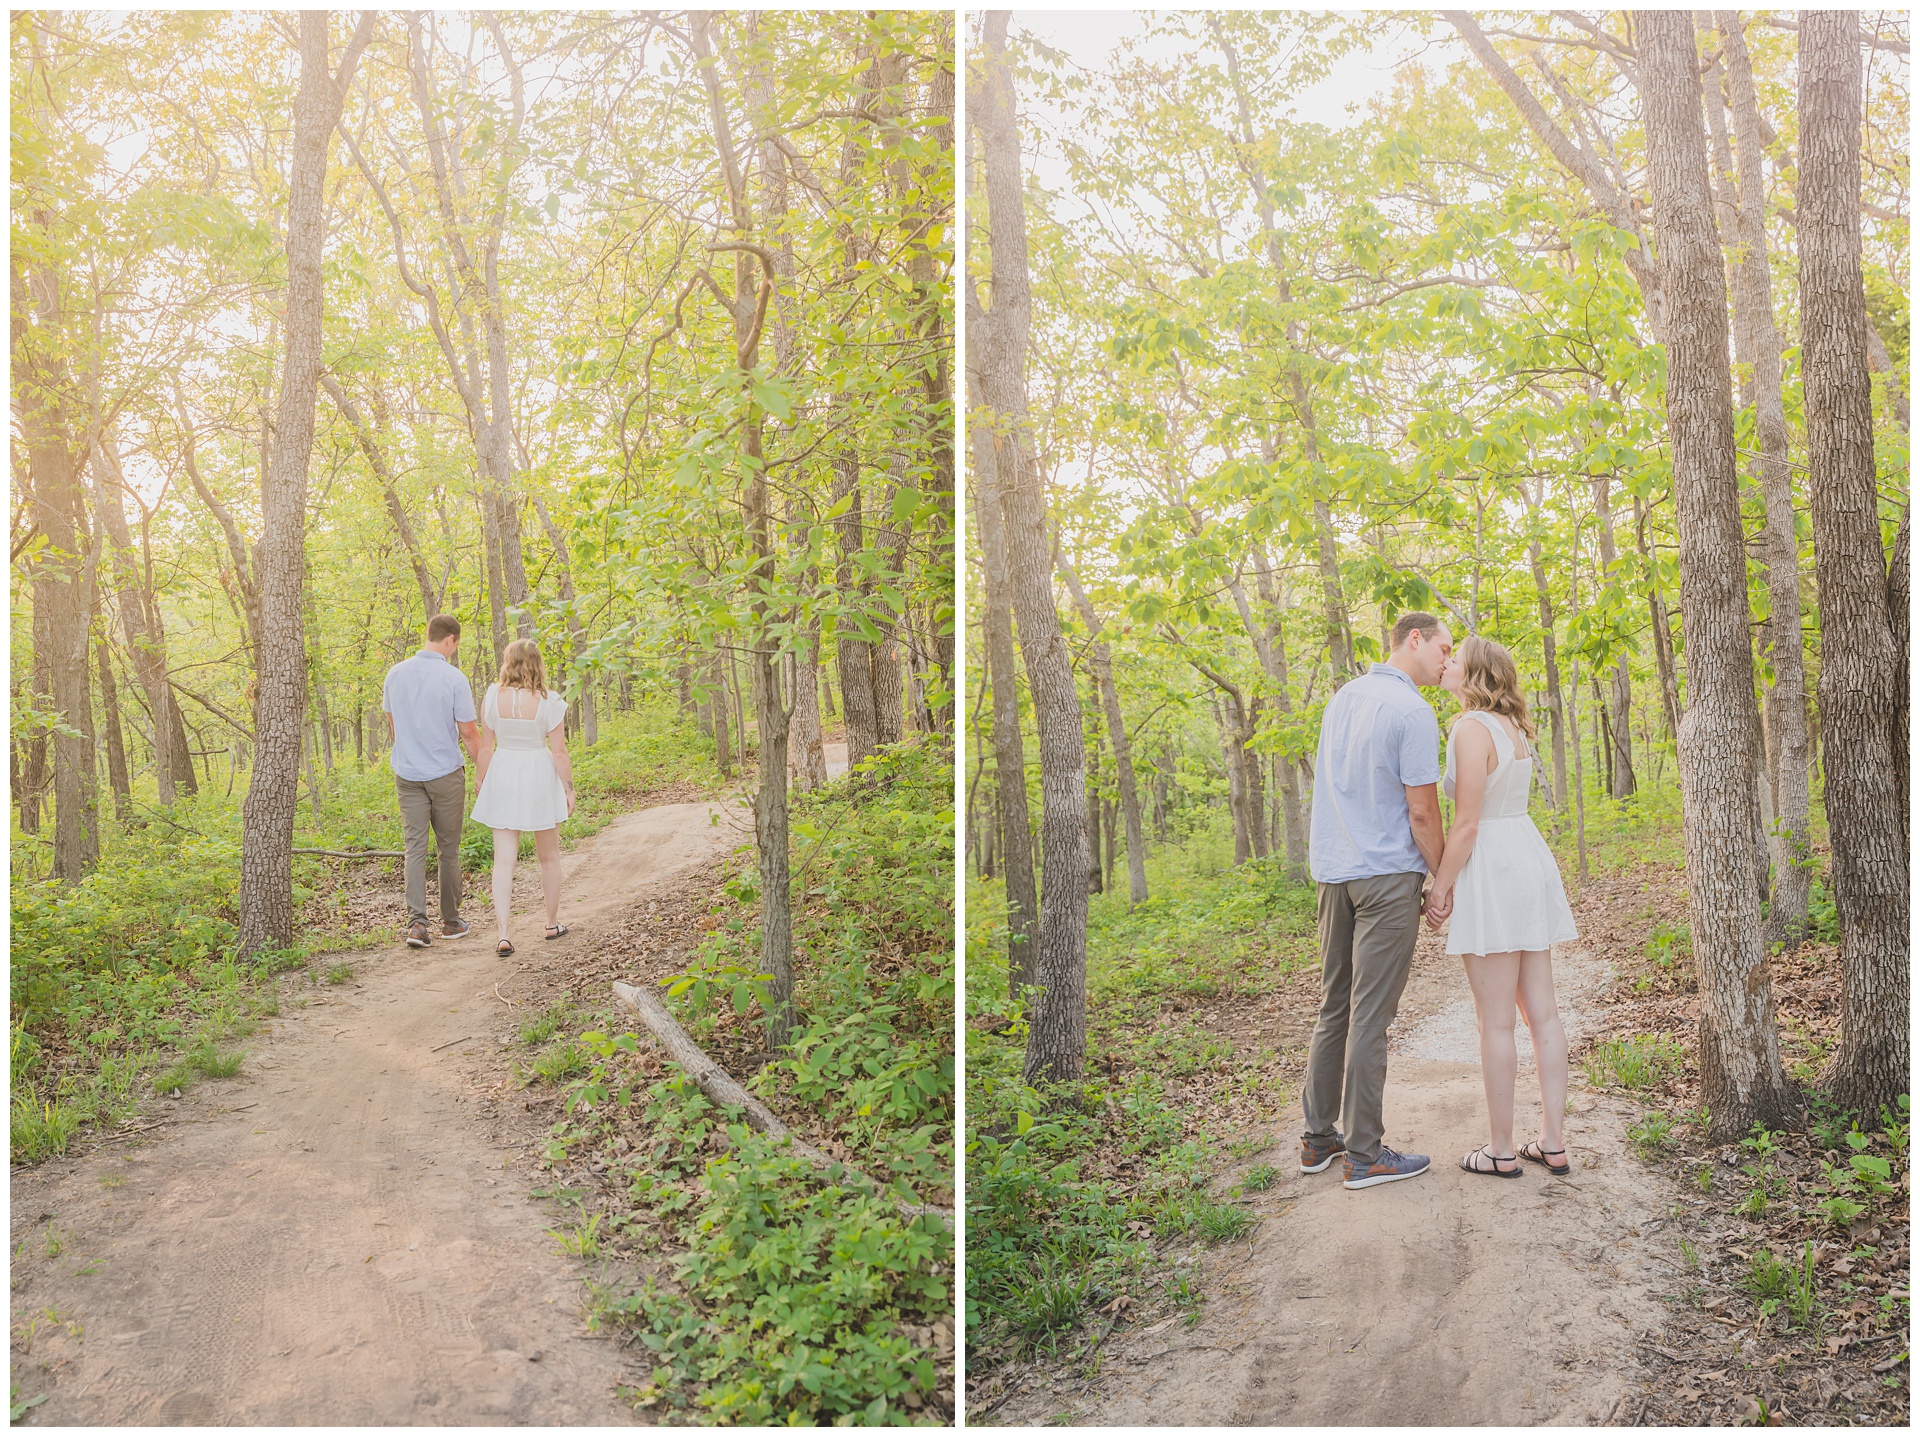 Engagement photography at Shawnee Mission Park by Kansas City wedding photographers Wisdom-Watson Weddings.